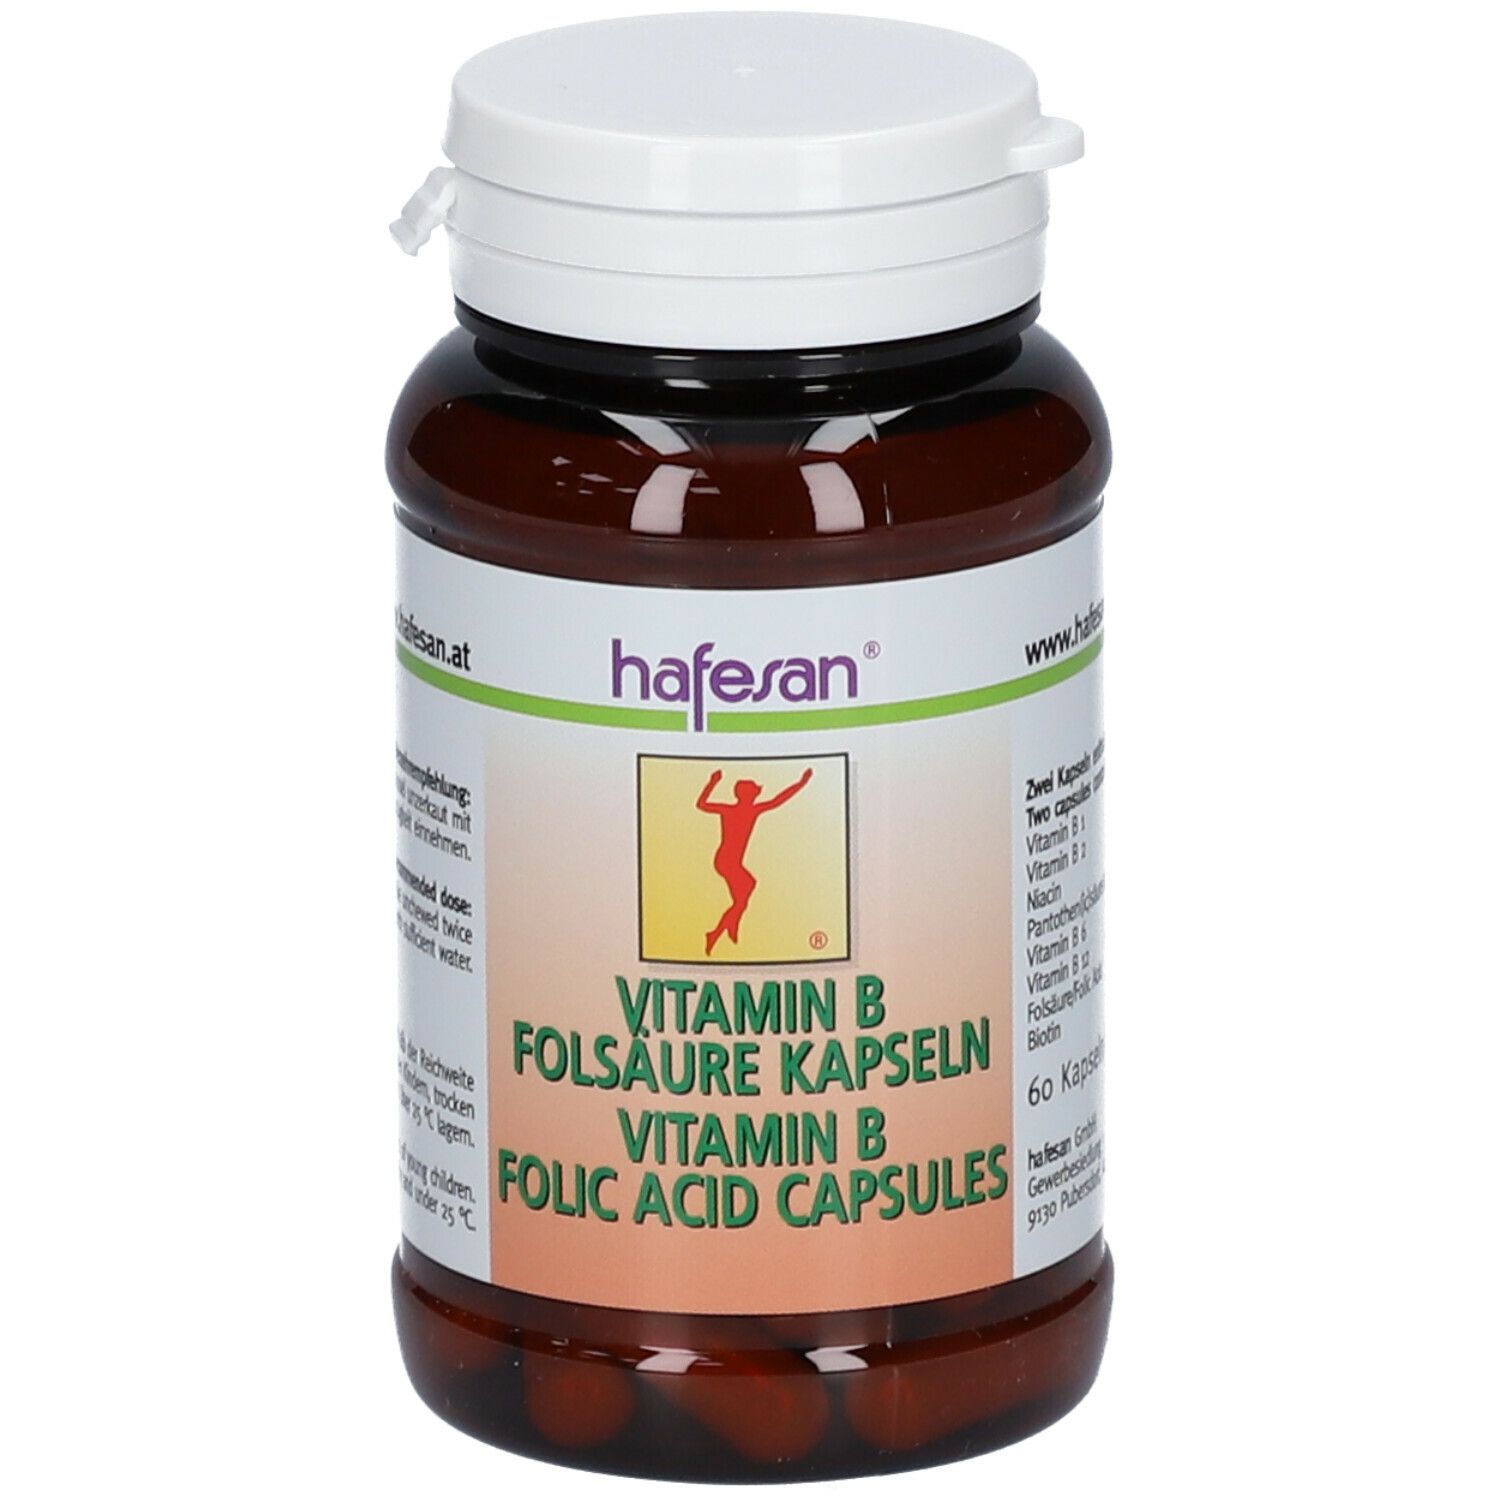 hafesan® Vitamin B Folsäure